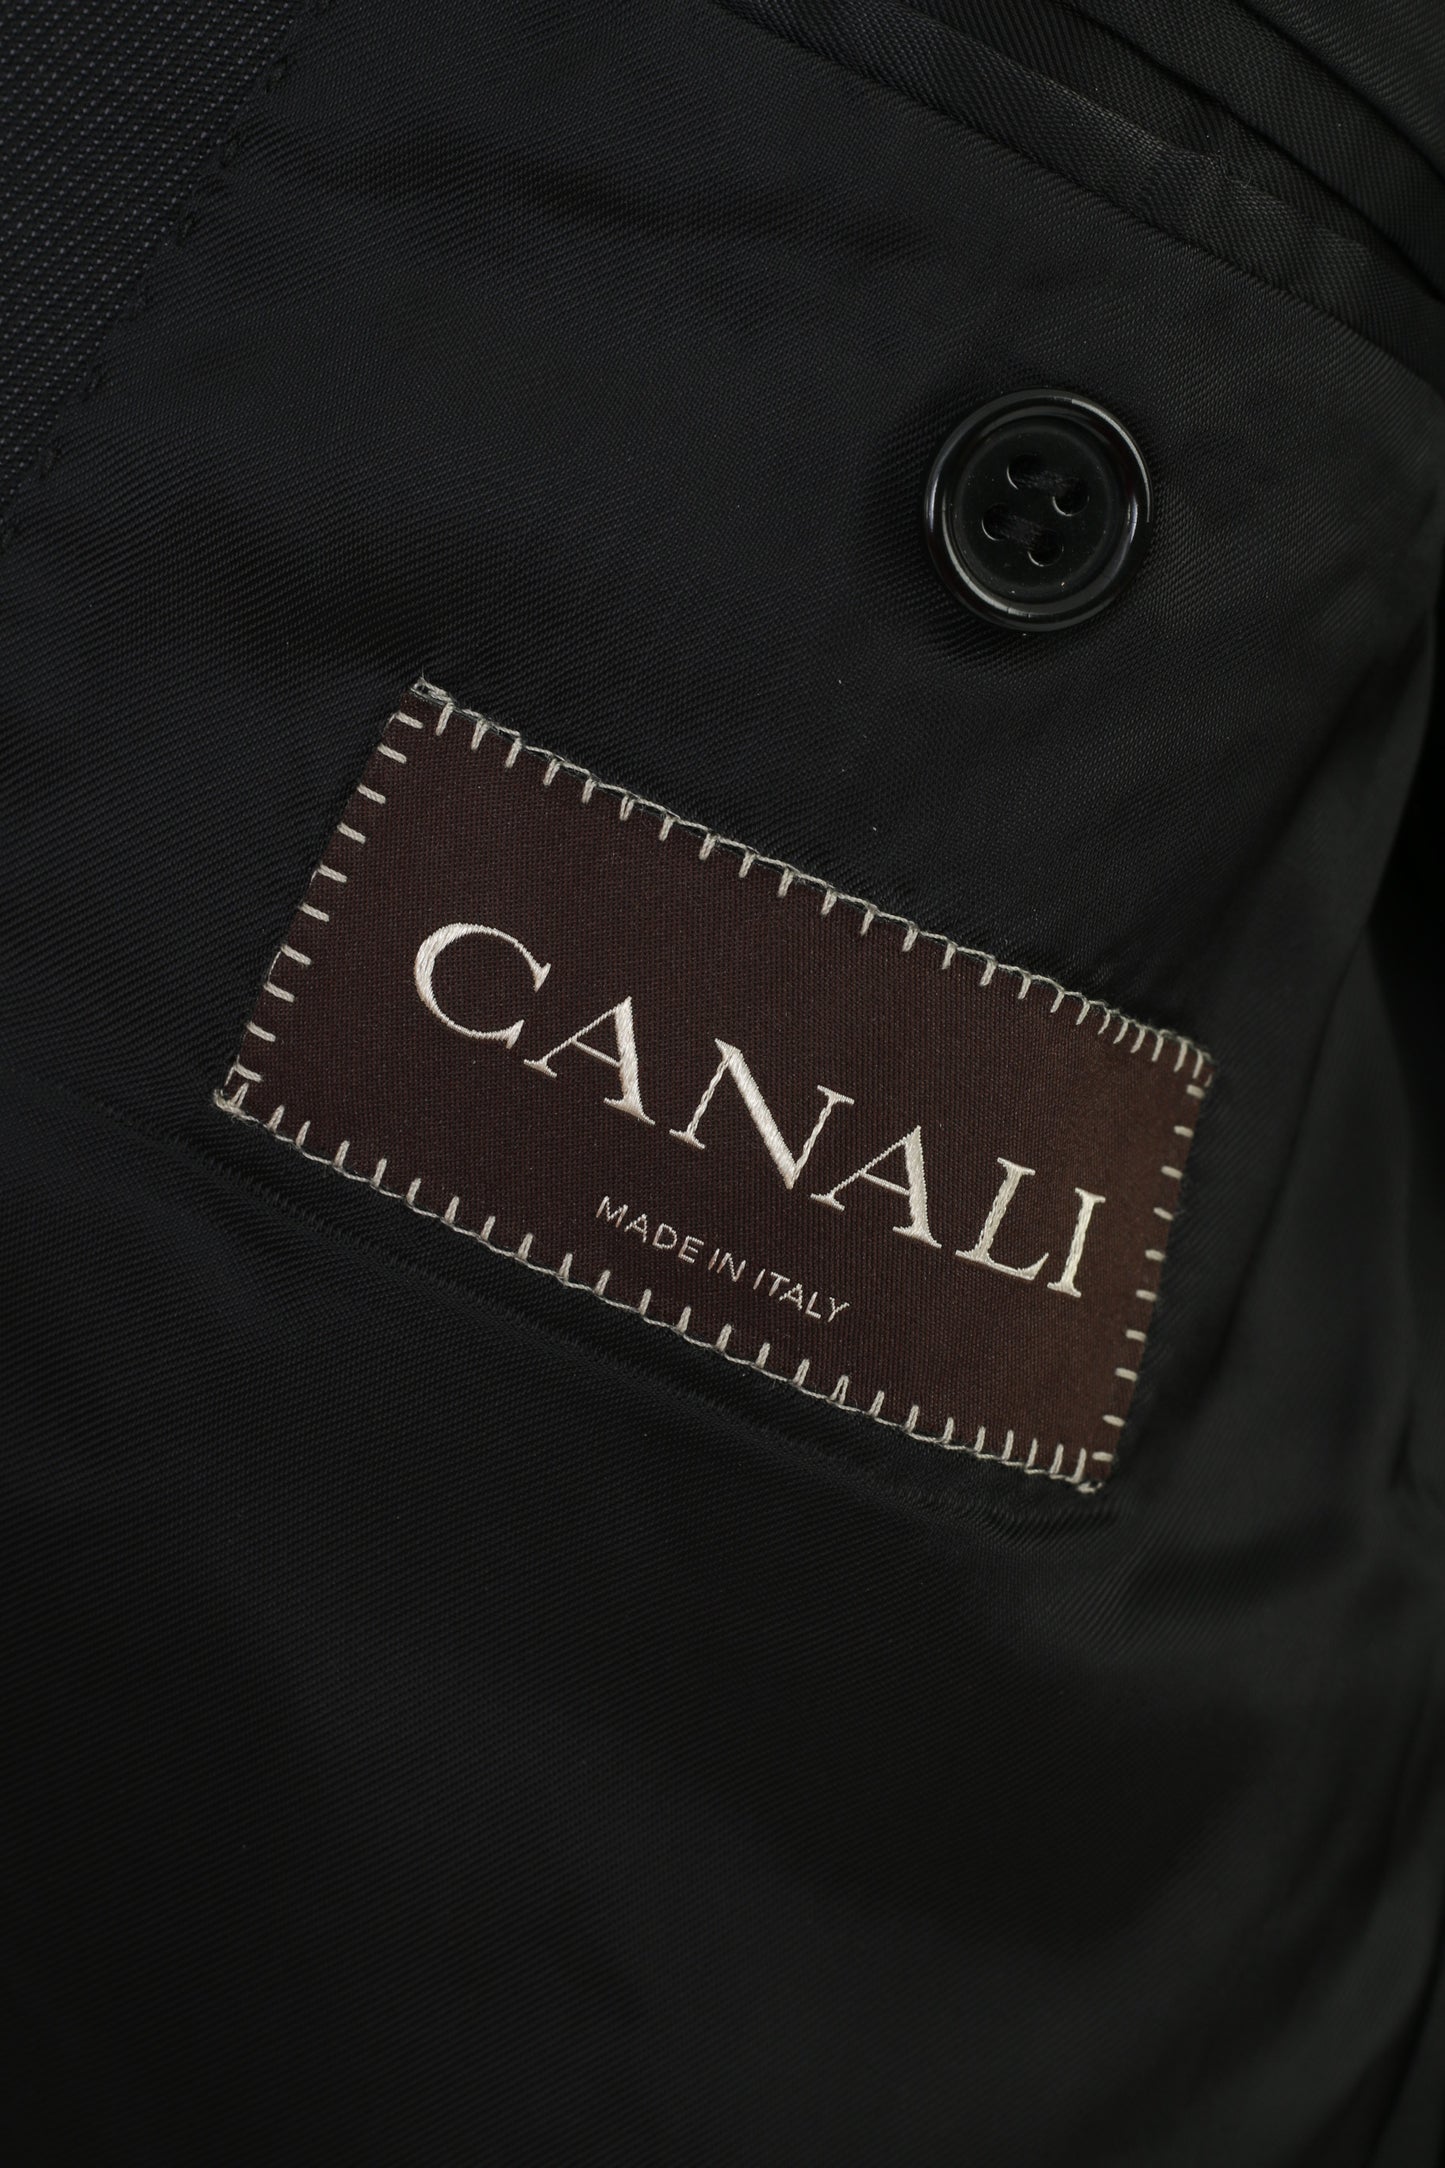 Canali Hommes 46 Blazer Marine Laine Simple Boutonnage Italie Épaulettes Veste Vintage